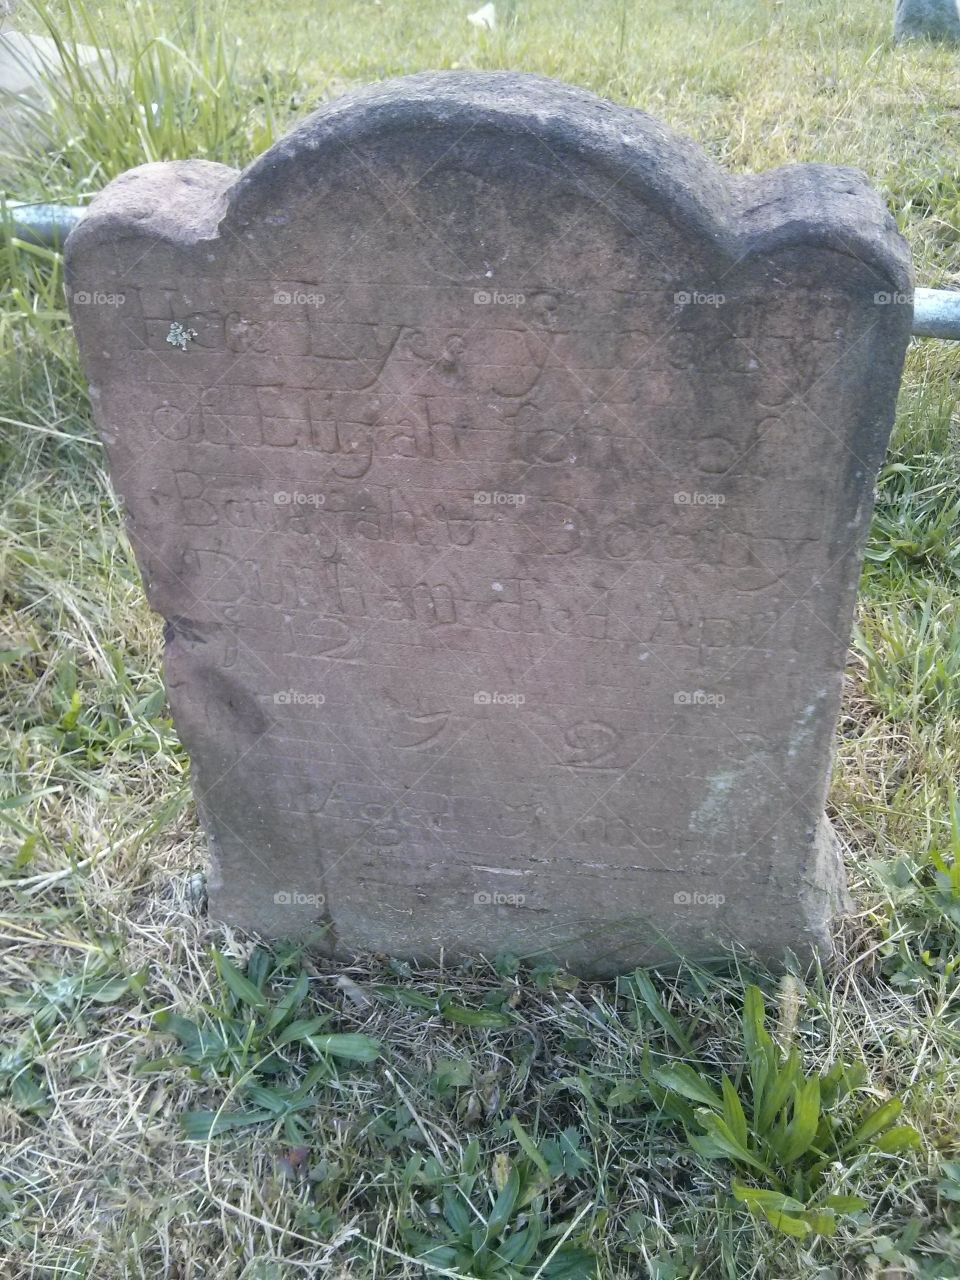 Piscatawaytown Burial ground tombstone